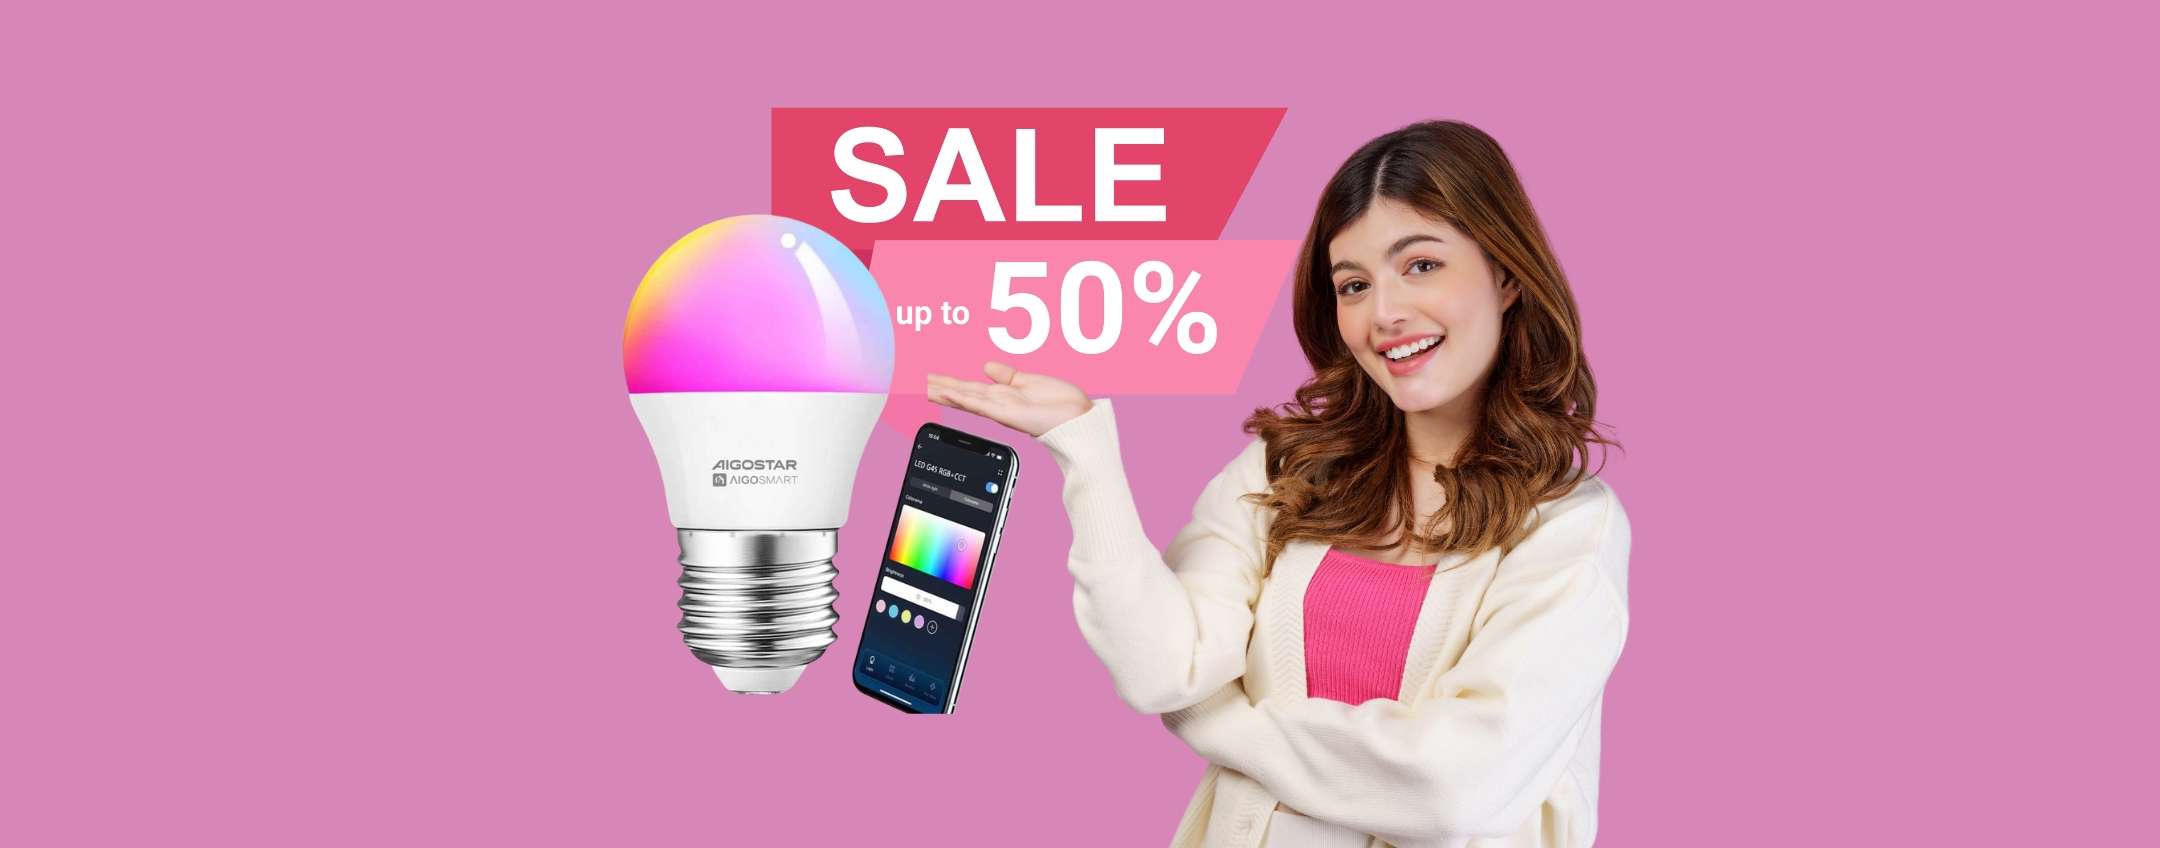 Aigostar: lampadina smart Alexa/Google Home al 50% su